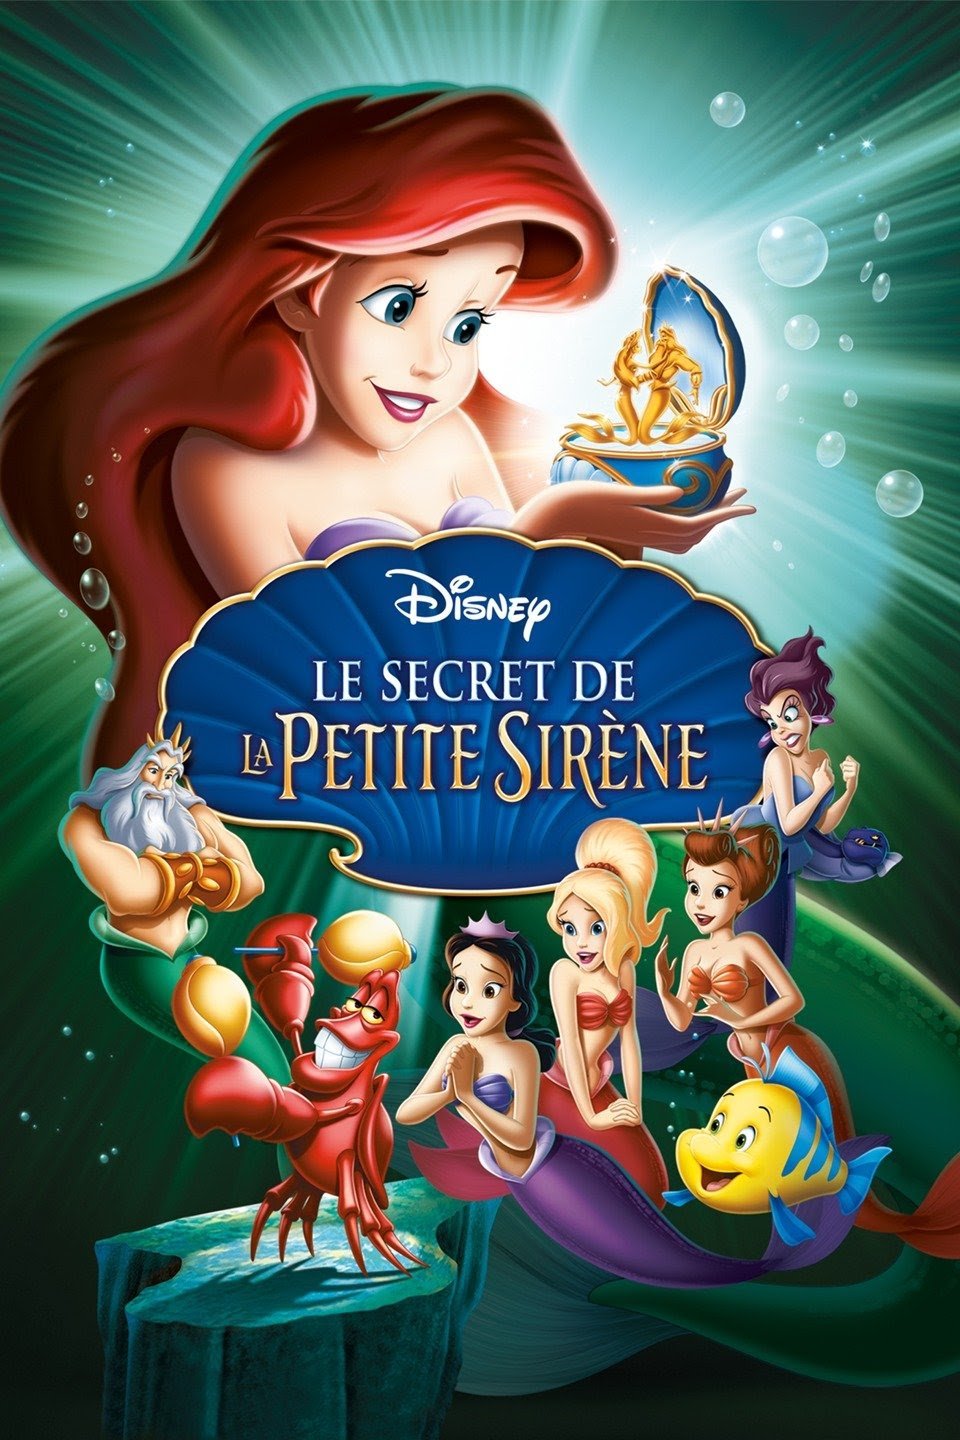 La Petite sirène en DVD : La Petite sirène DVD - AlloCiné